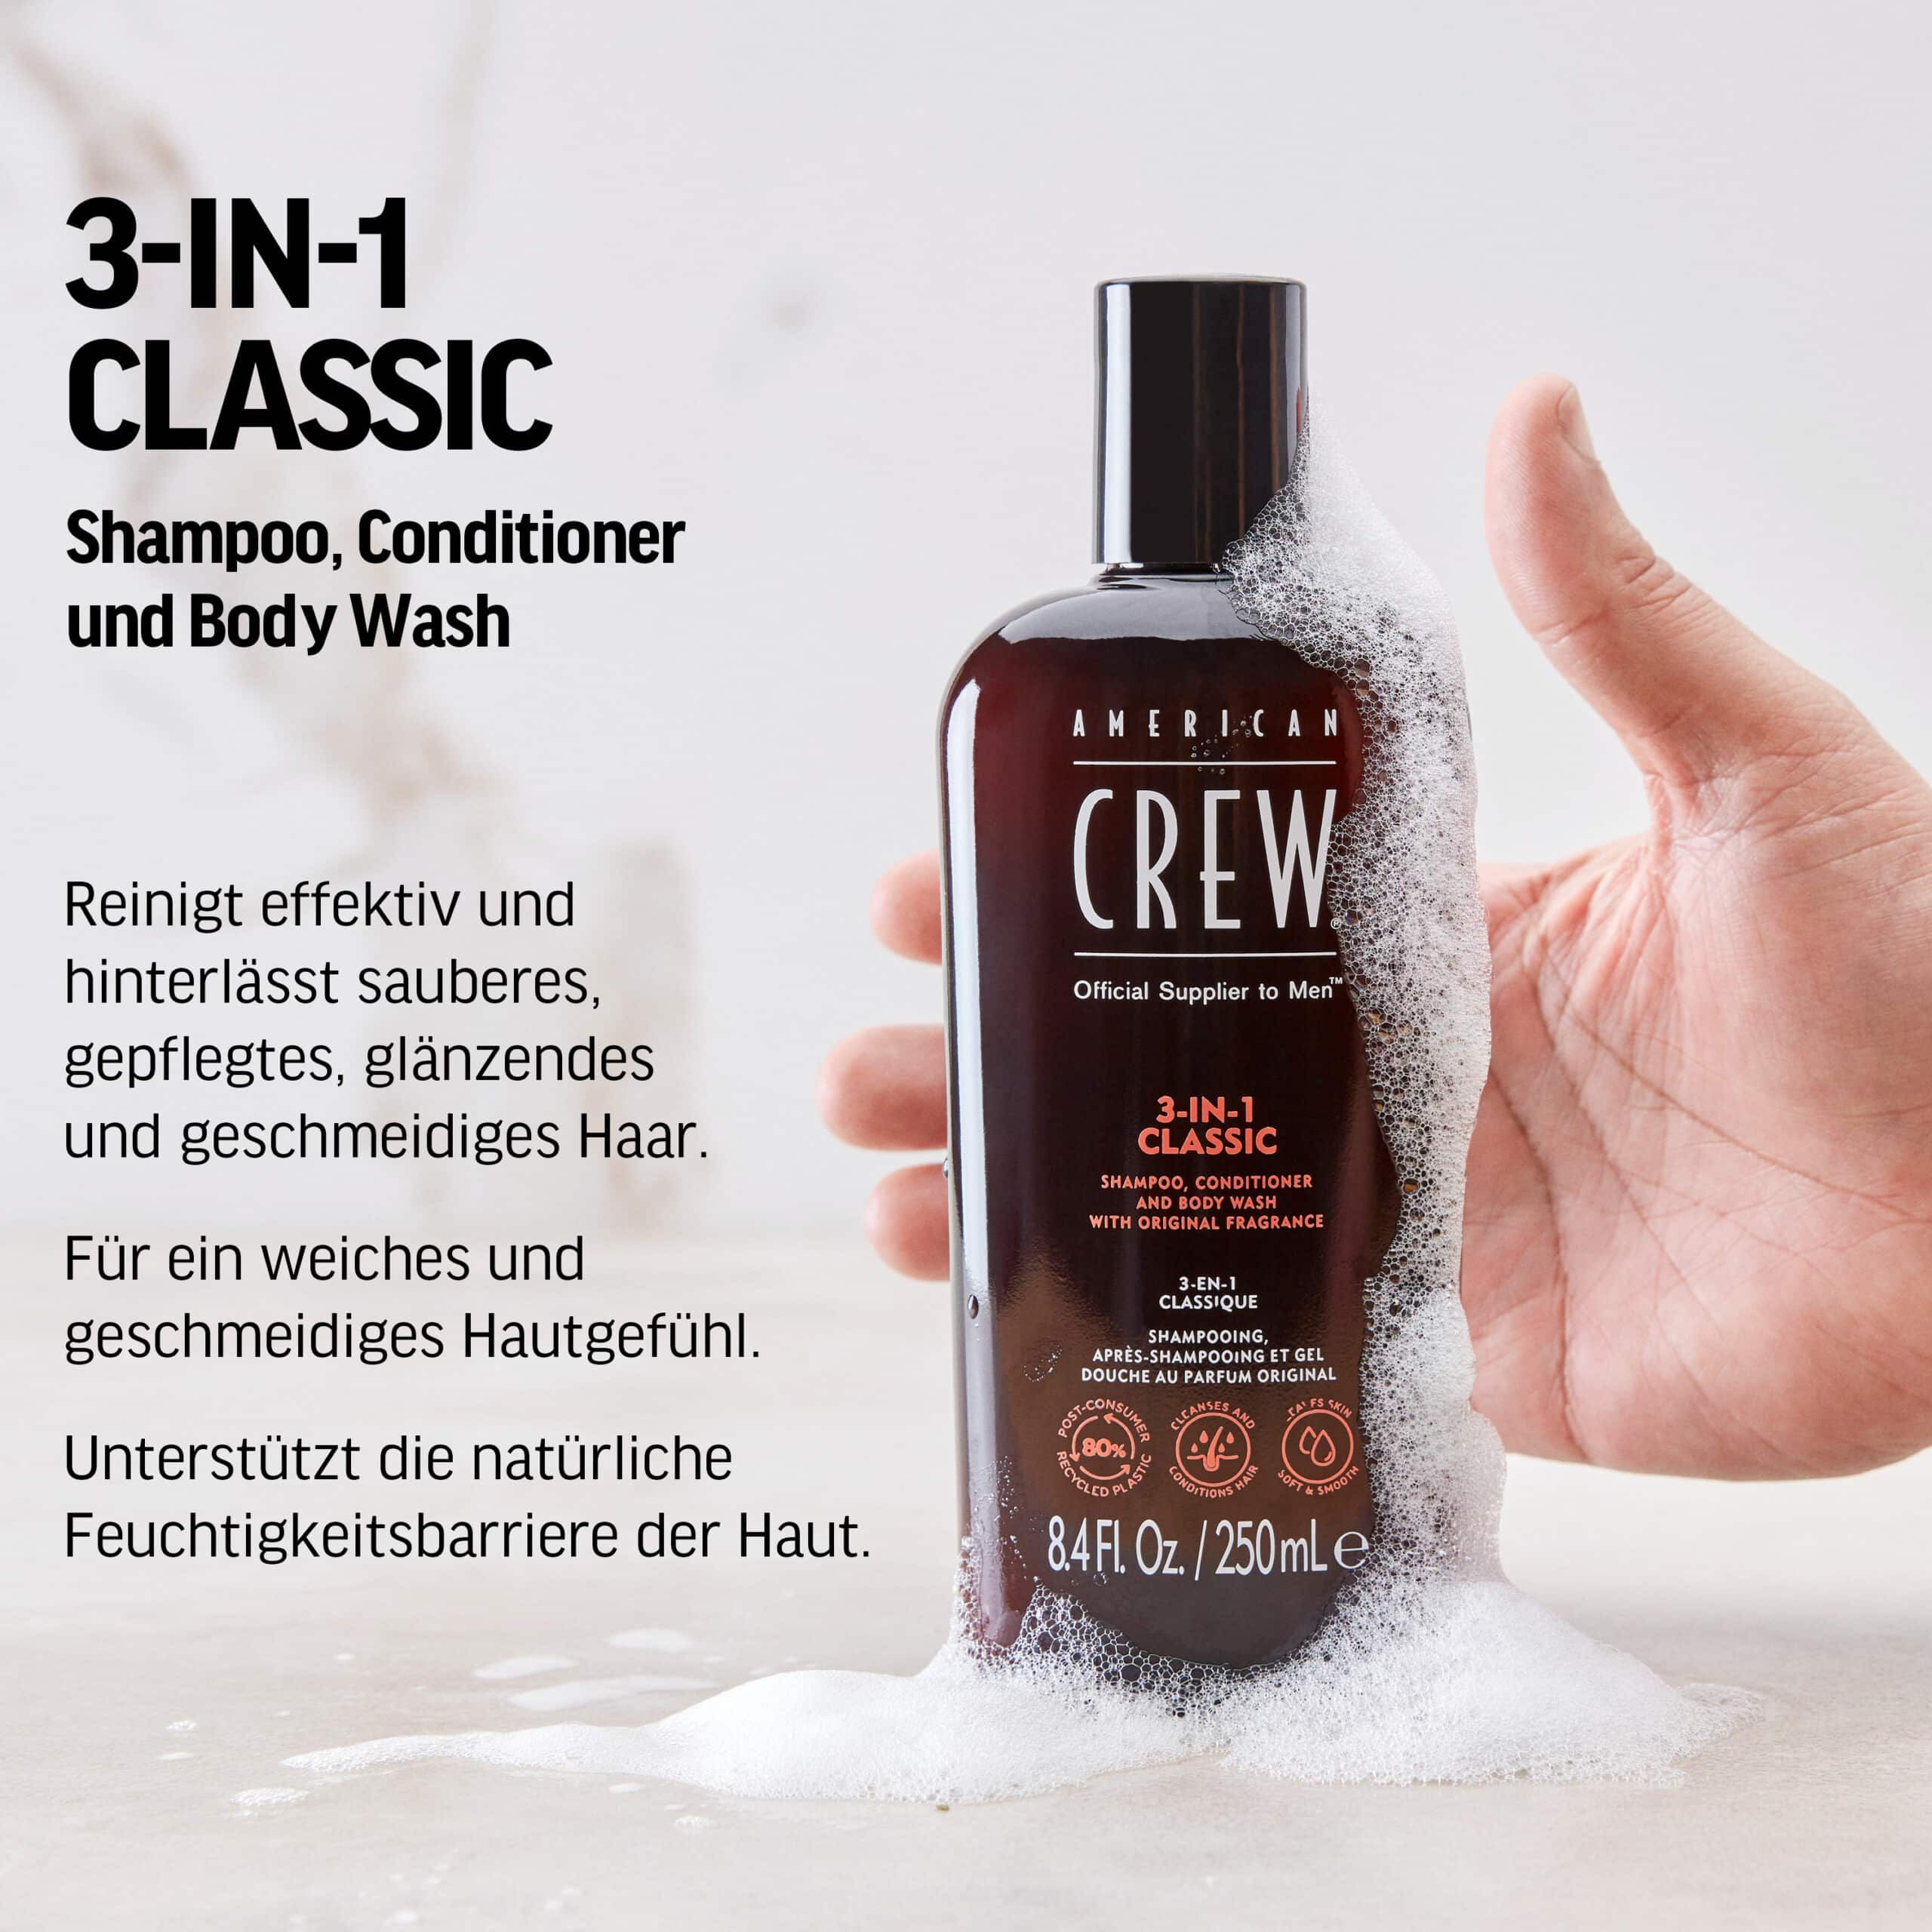 Revlon AMERICAN CREW Classic 3 in 1 Shampoo